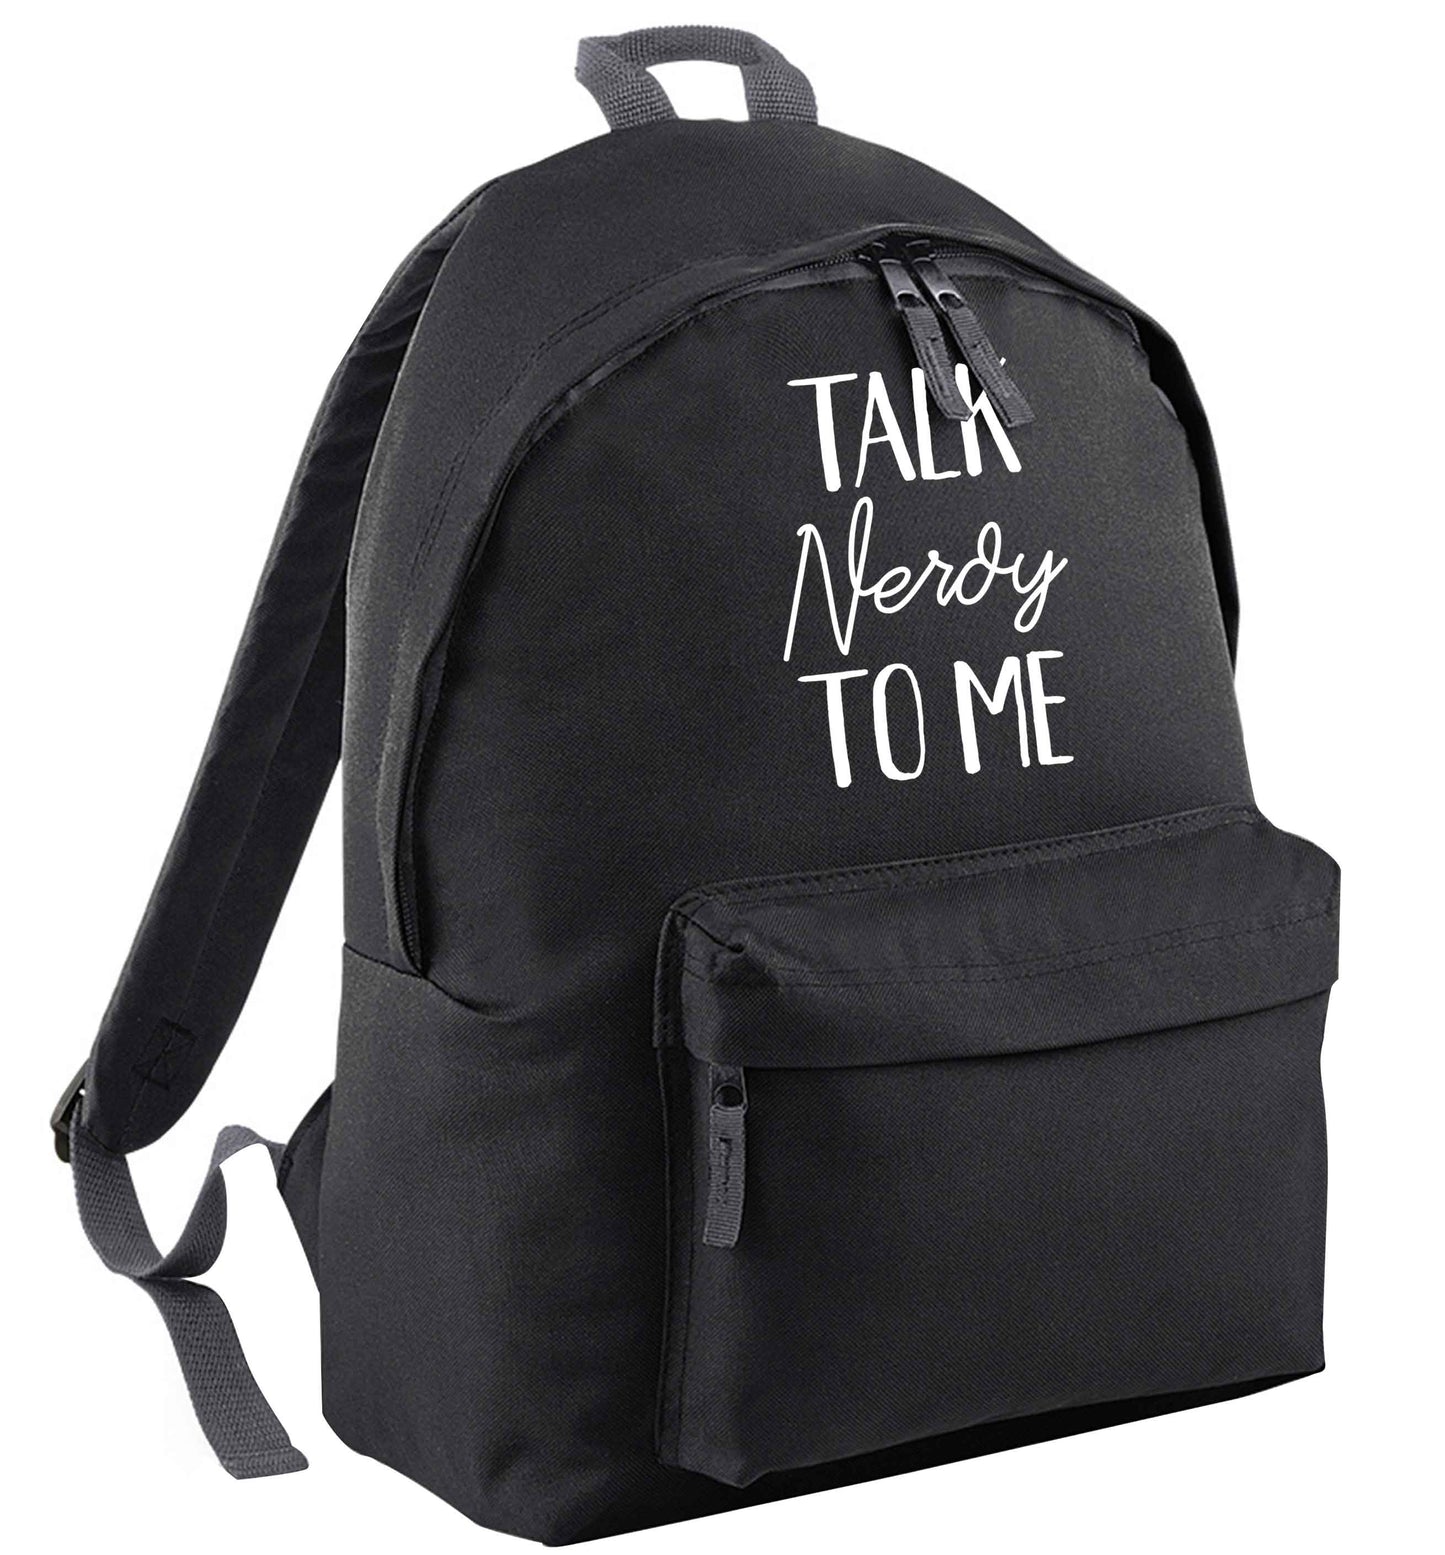 Talk nerdy to me black adults backpack